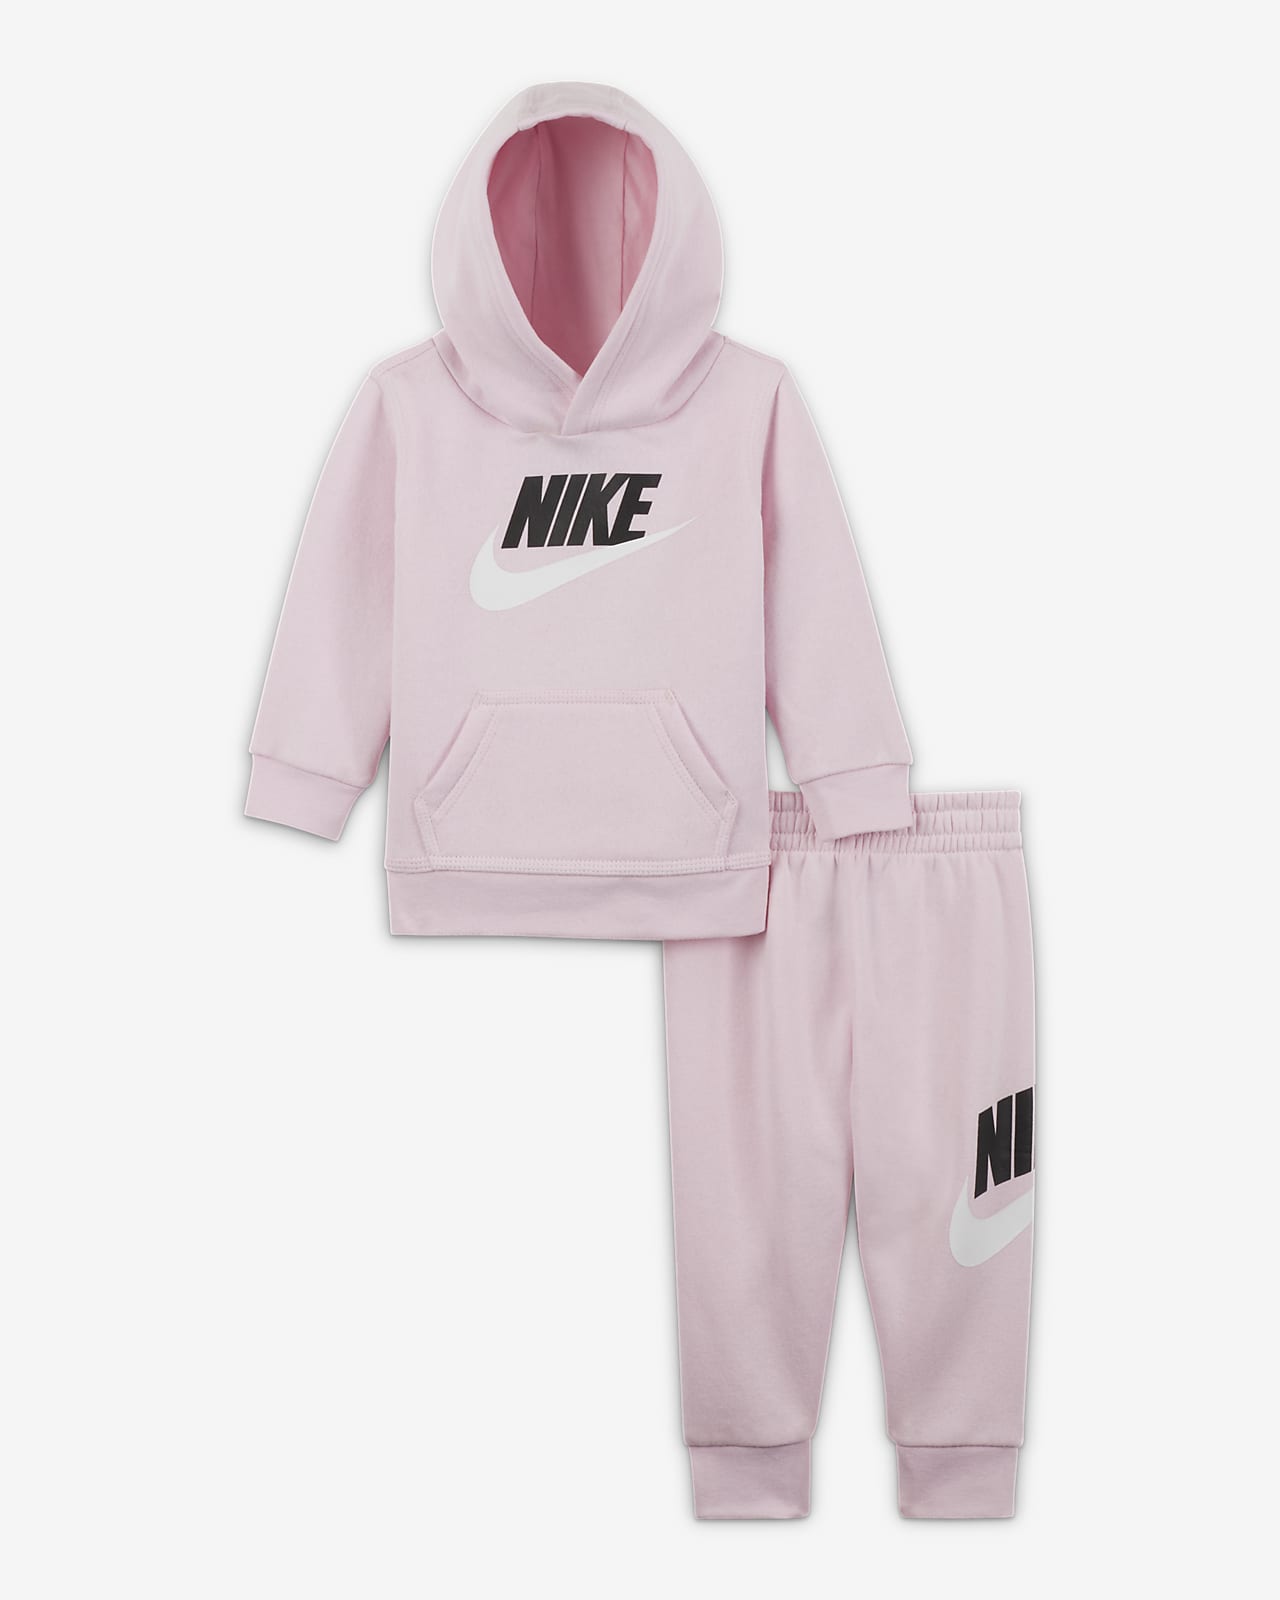 Nike Sportswear Club Fleece Conjunt de dessuadora amb caputxa i pantalons - Nadó (12-24 M)